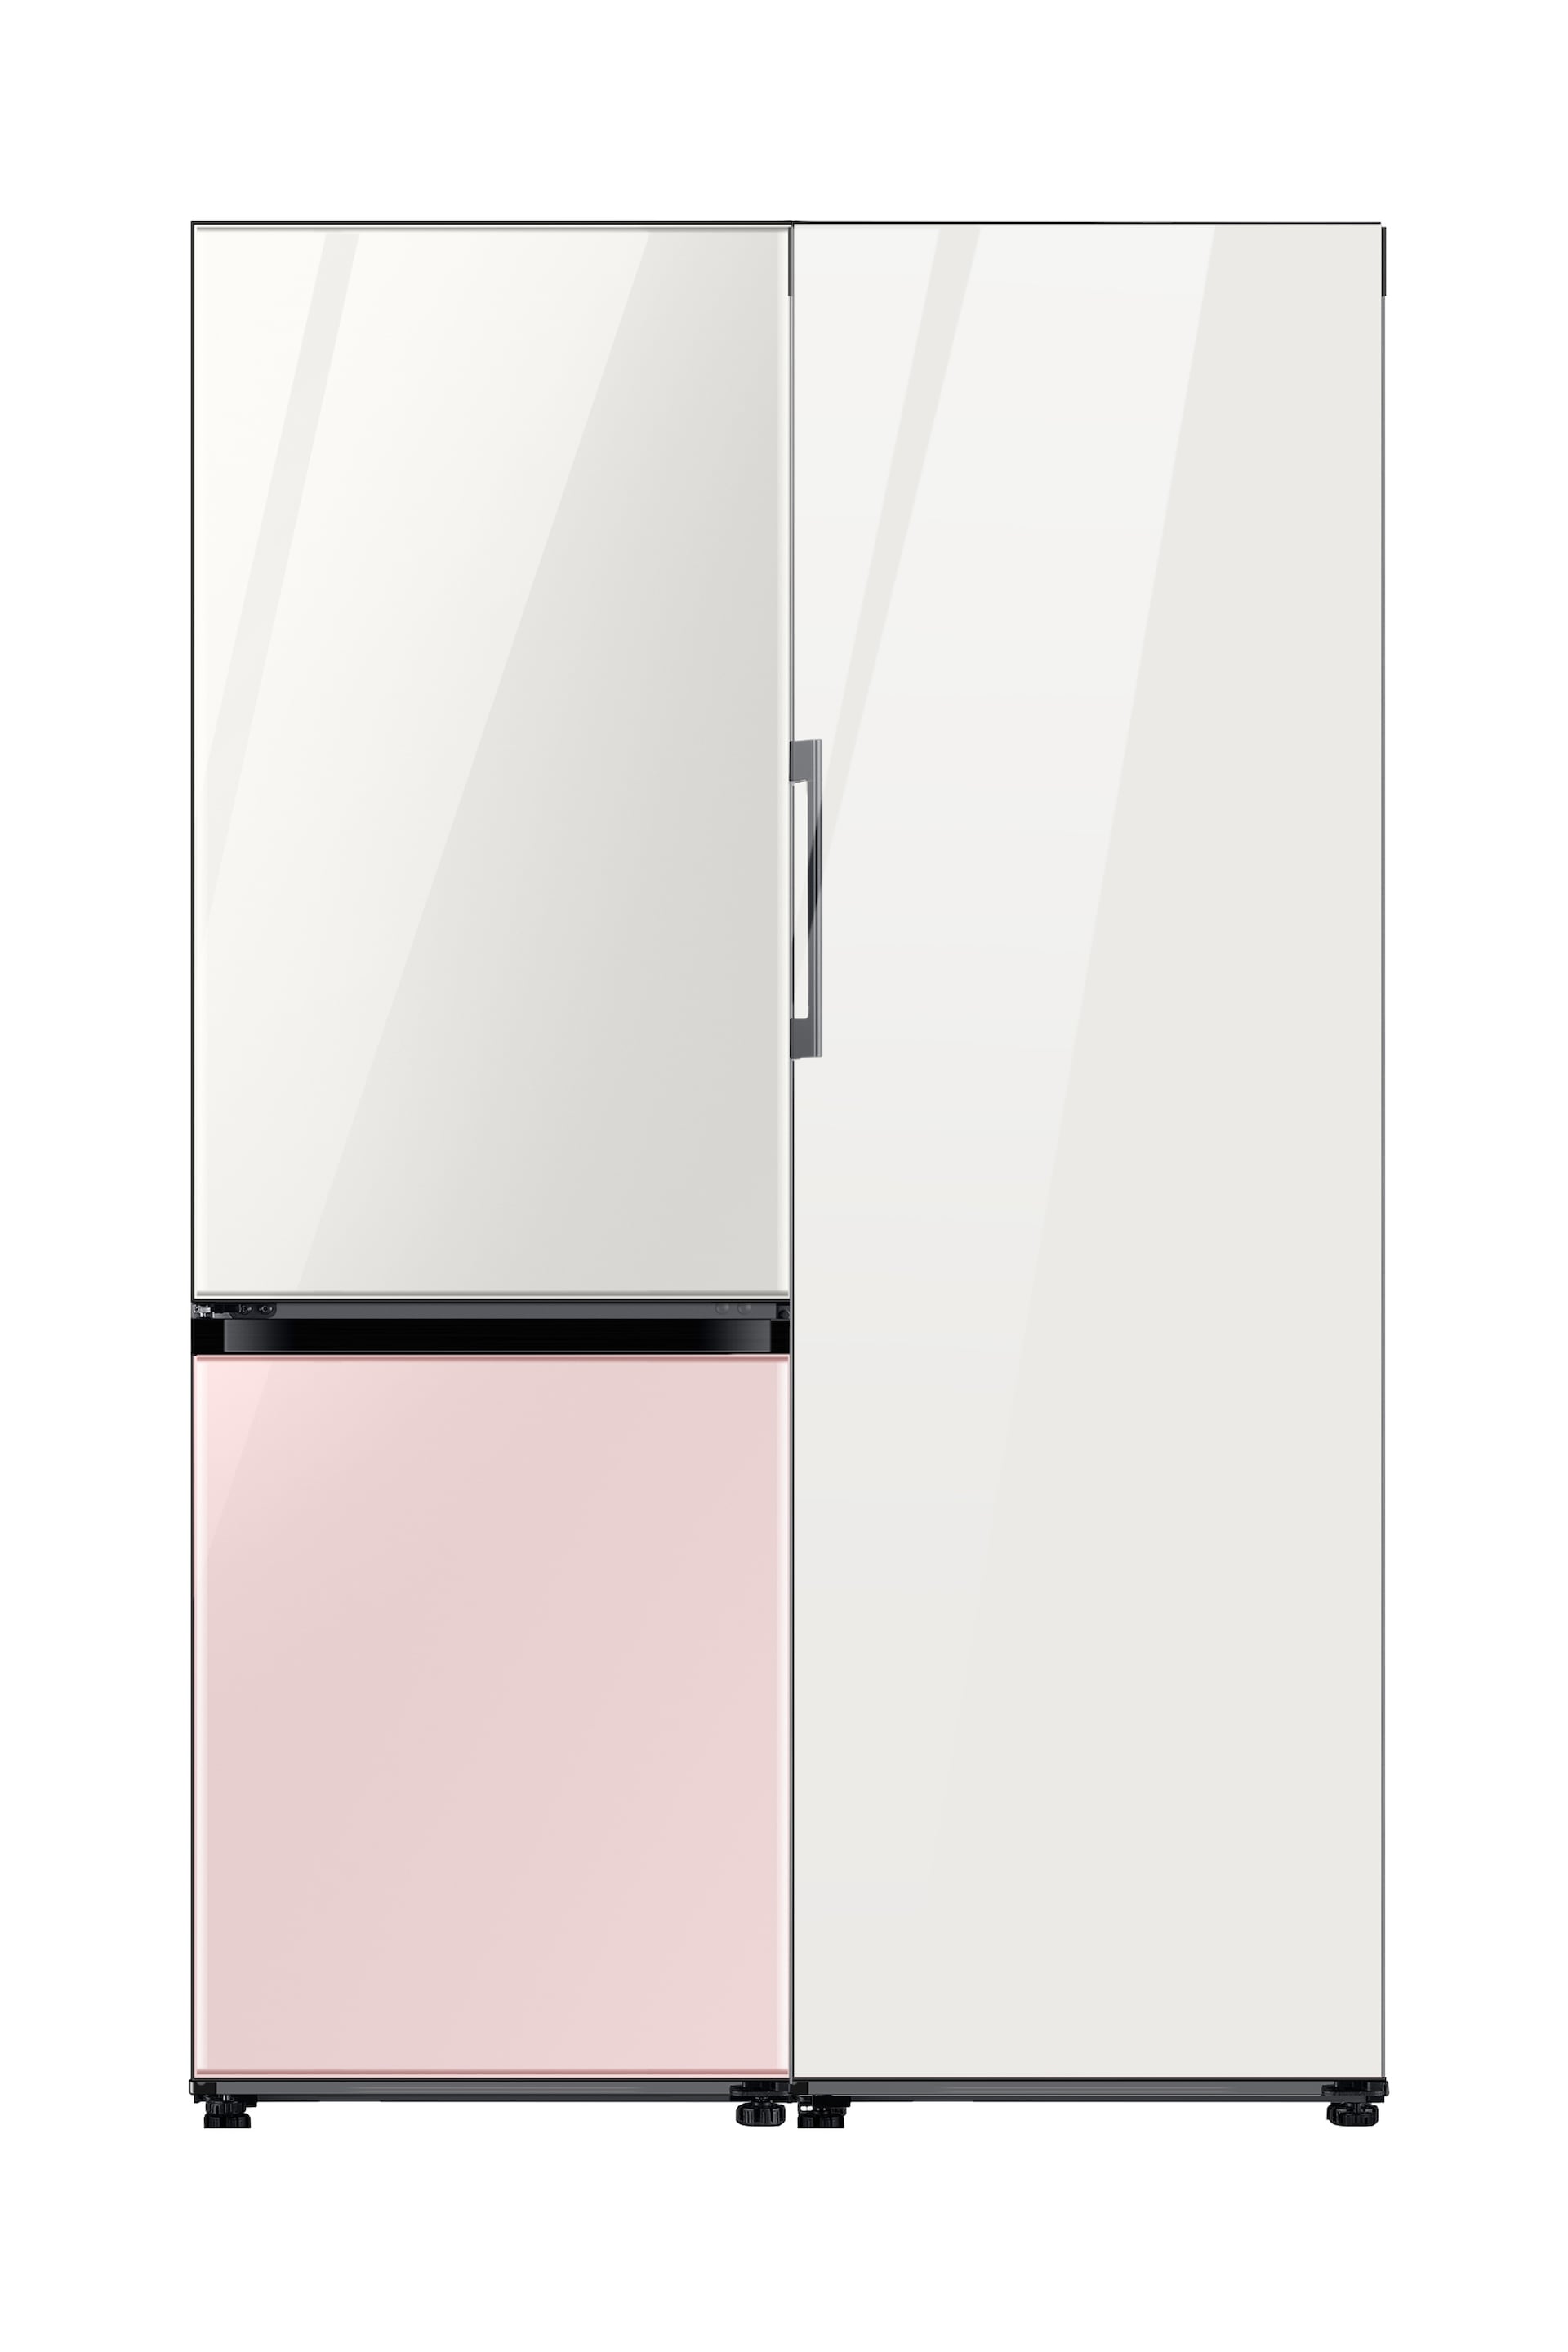 BESPOKE Refrigerator 2 Door (Top Glam White Bottom Glam Pink) + 1 Door (Glam White) Combination